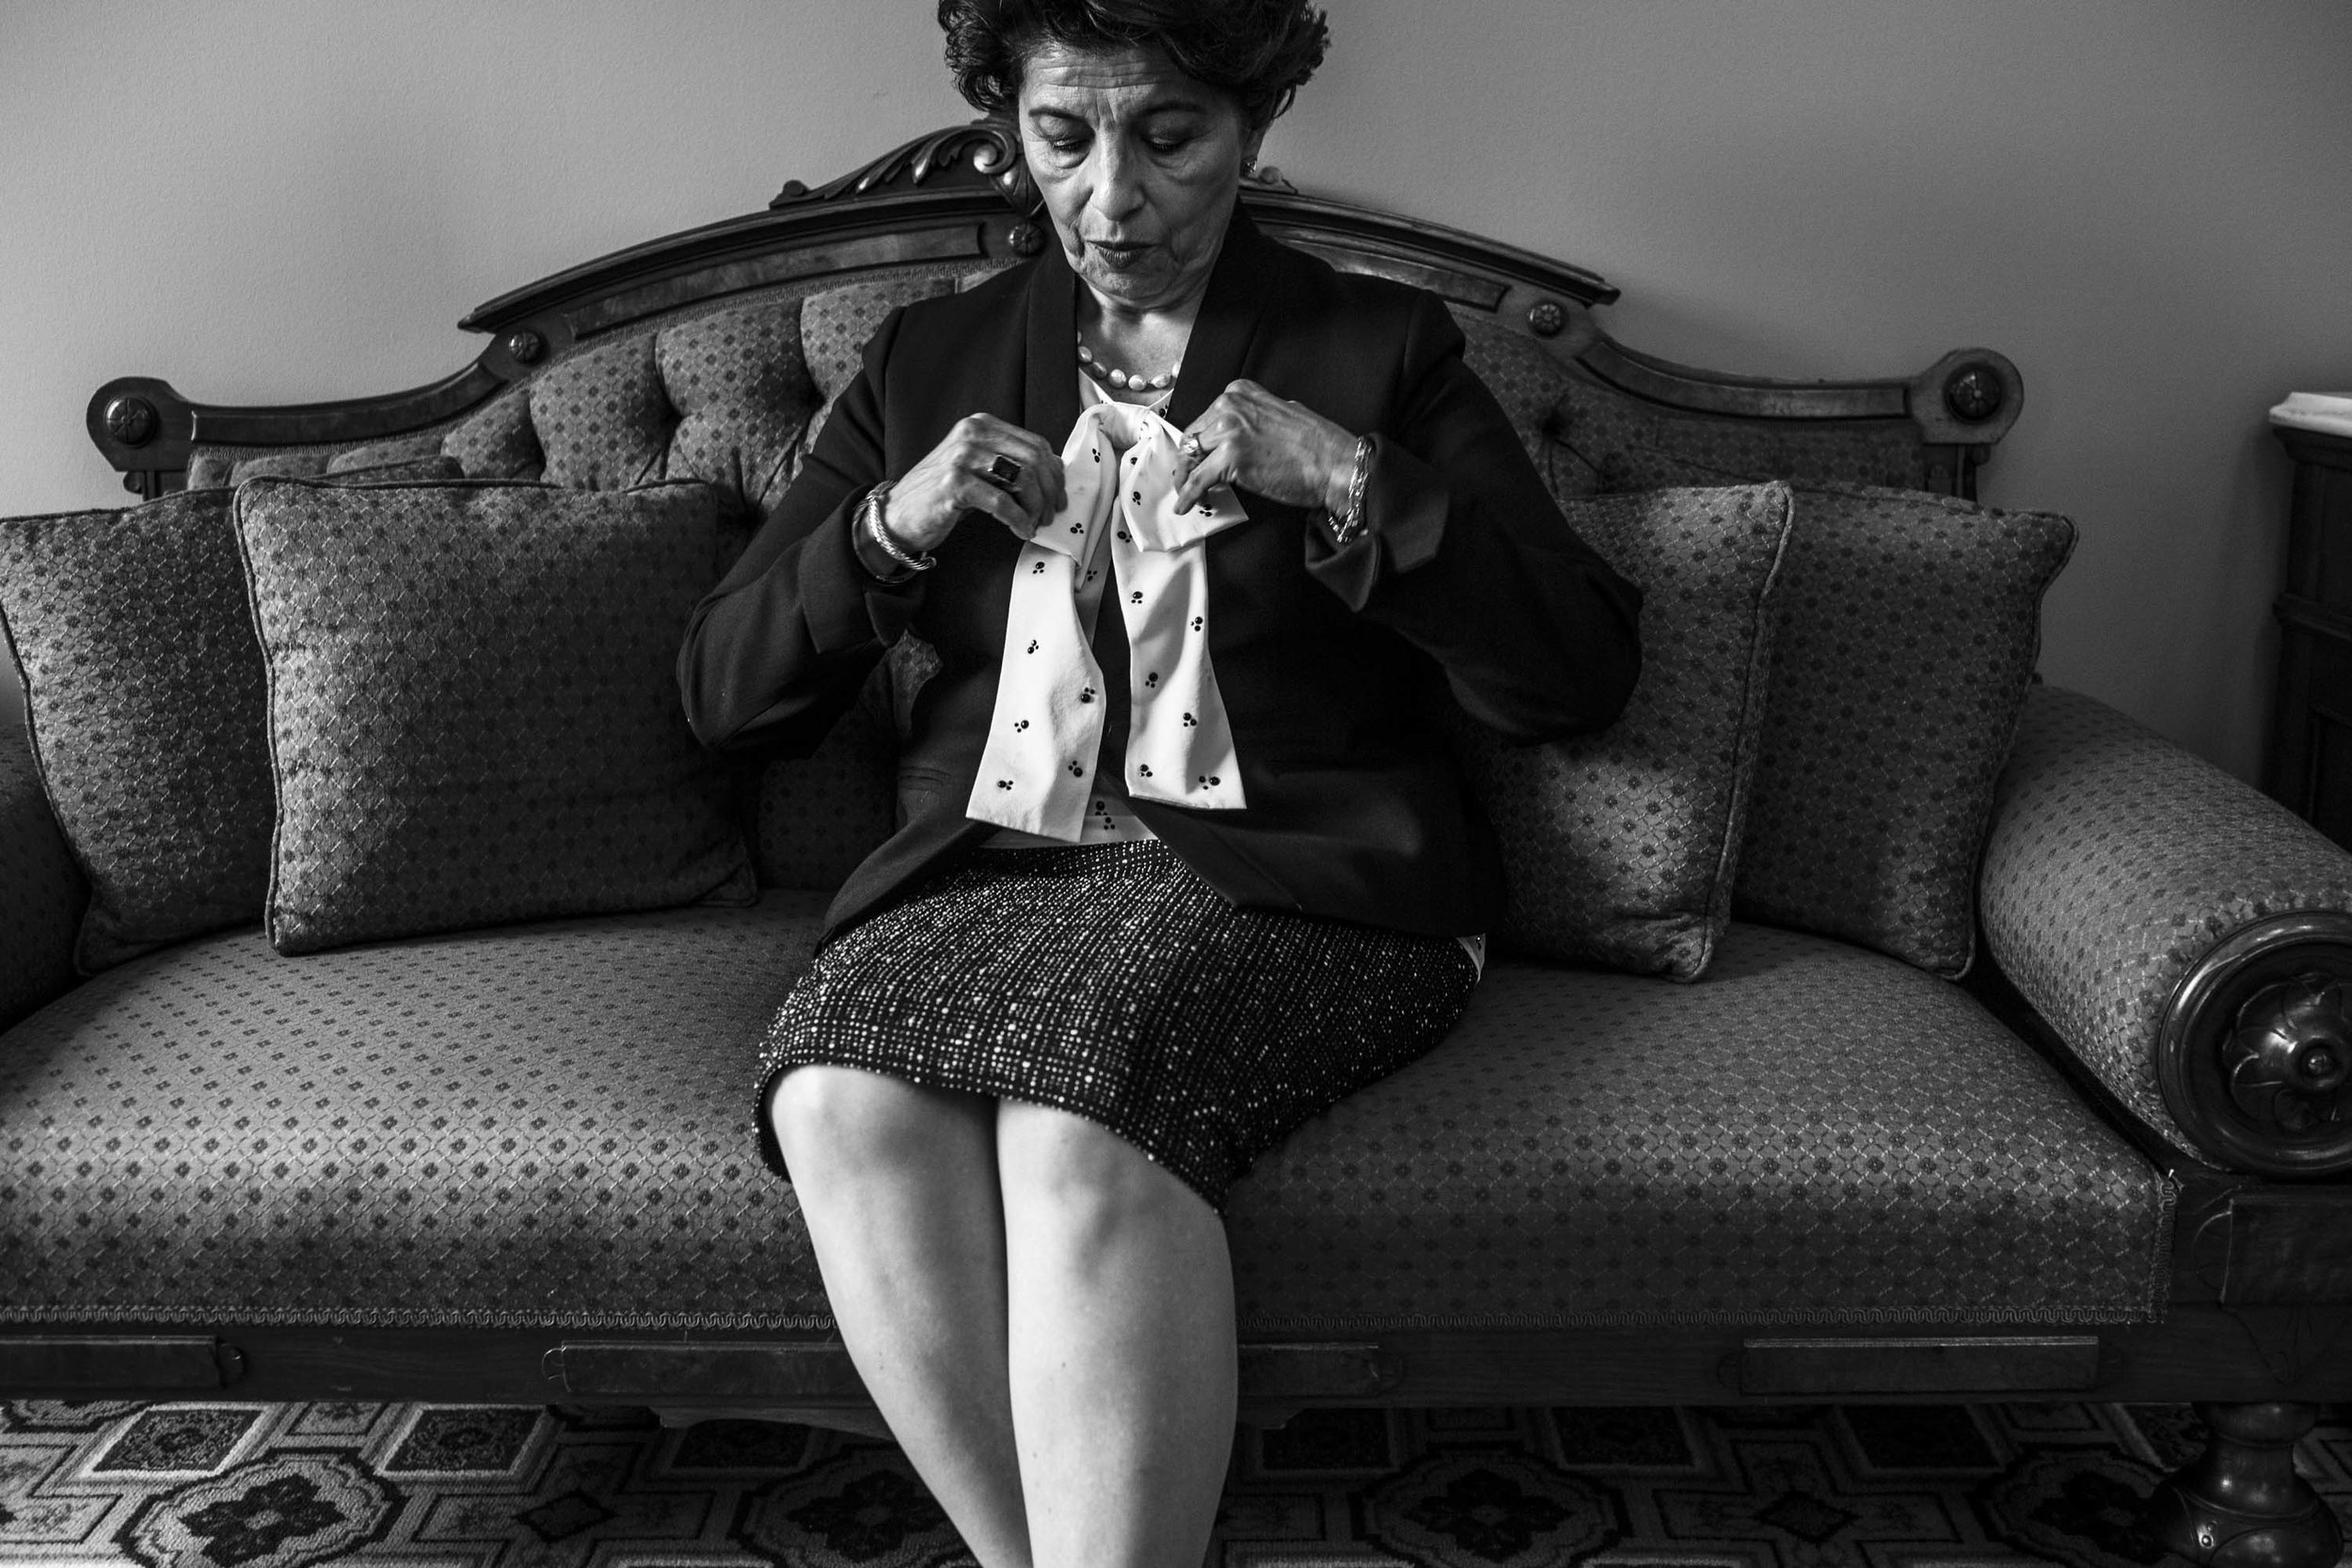   US Treasurer Jovita Carranza prepares for a photo shoot in her office in Washington, DC.  